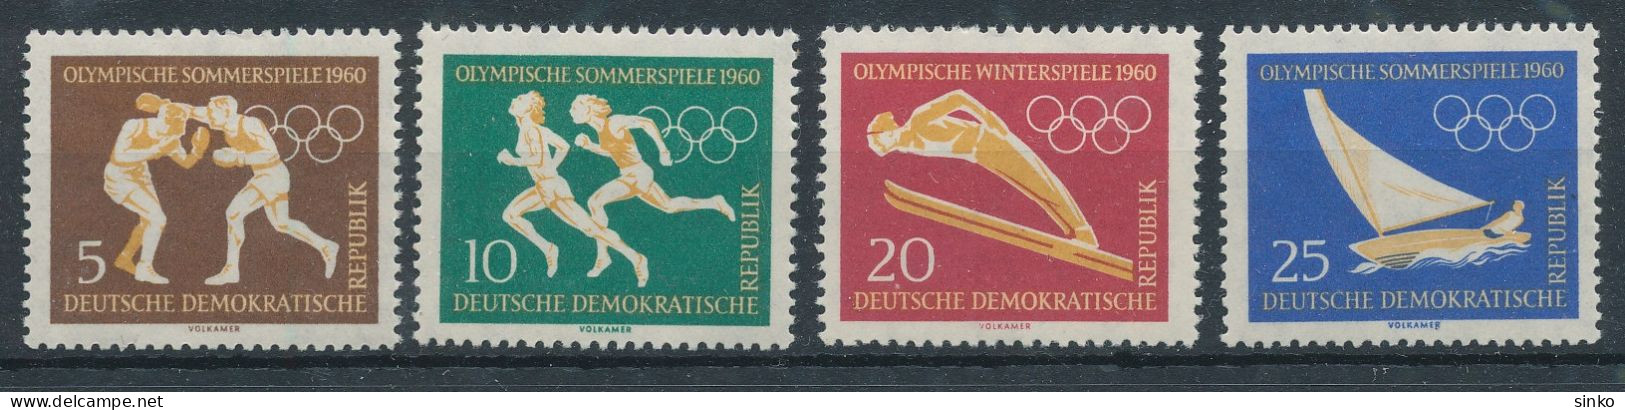 1960. German Democratic Republic - Olympics - Winter 1960: Squaw Valley